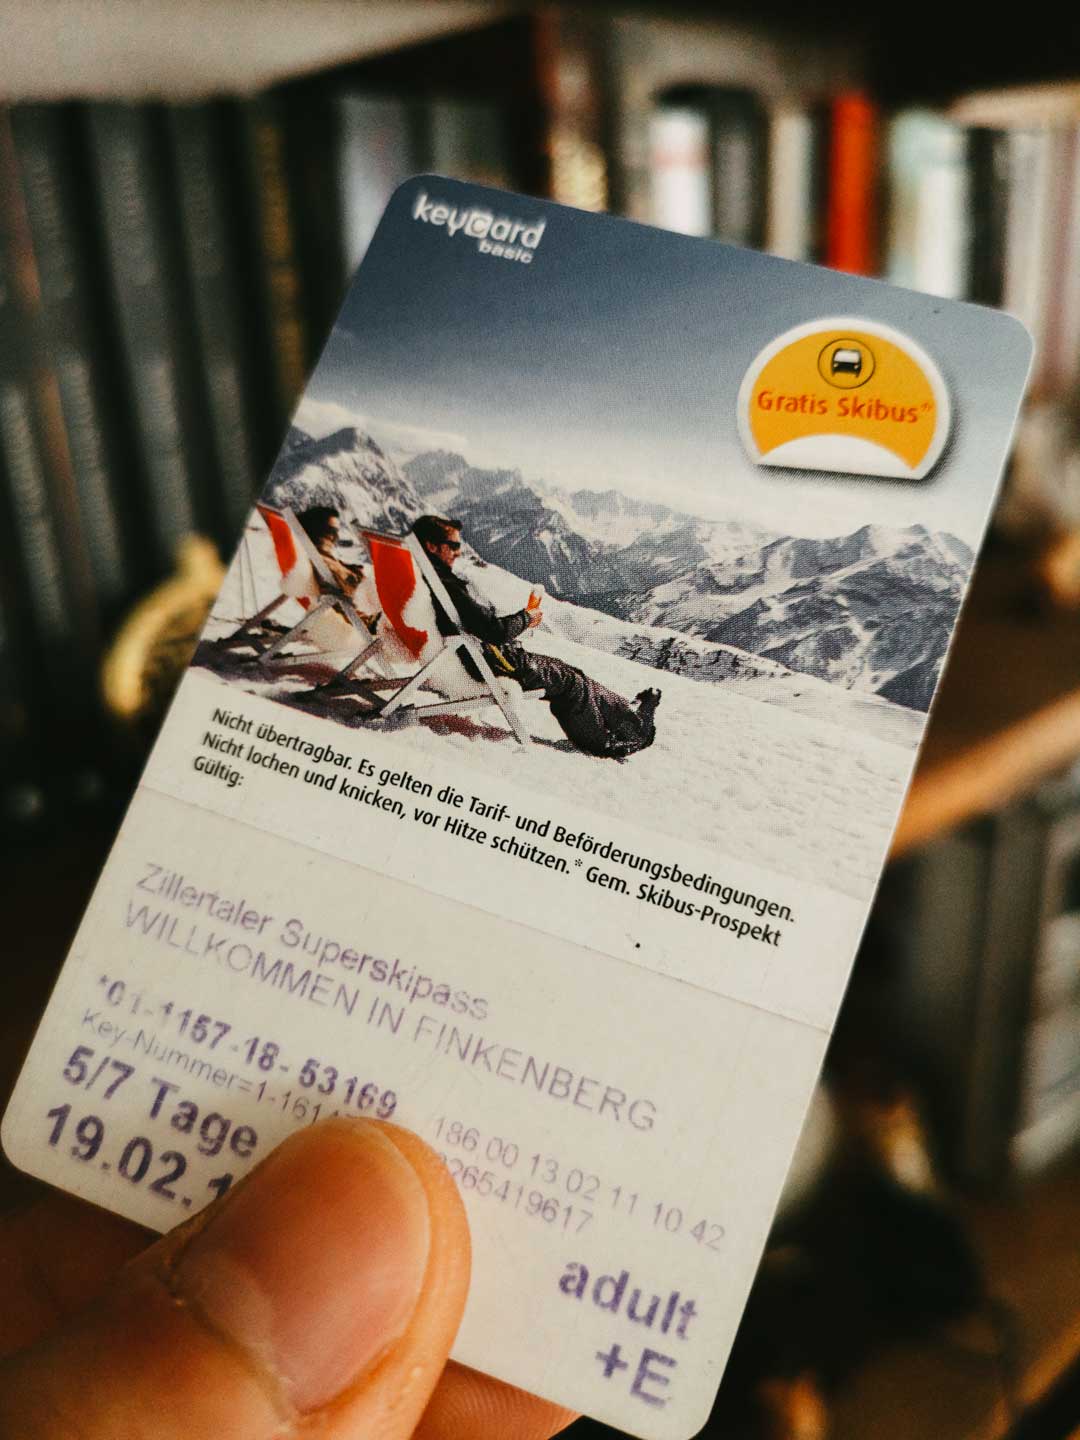 Zillertaler Super ski pass Tirol Austria travelshare.gr